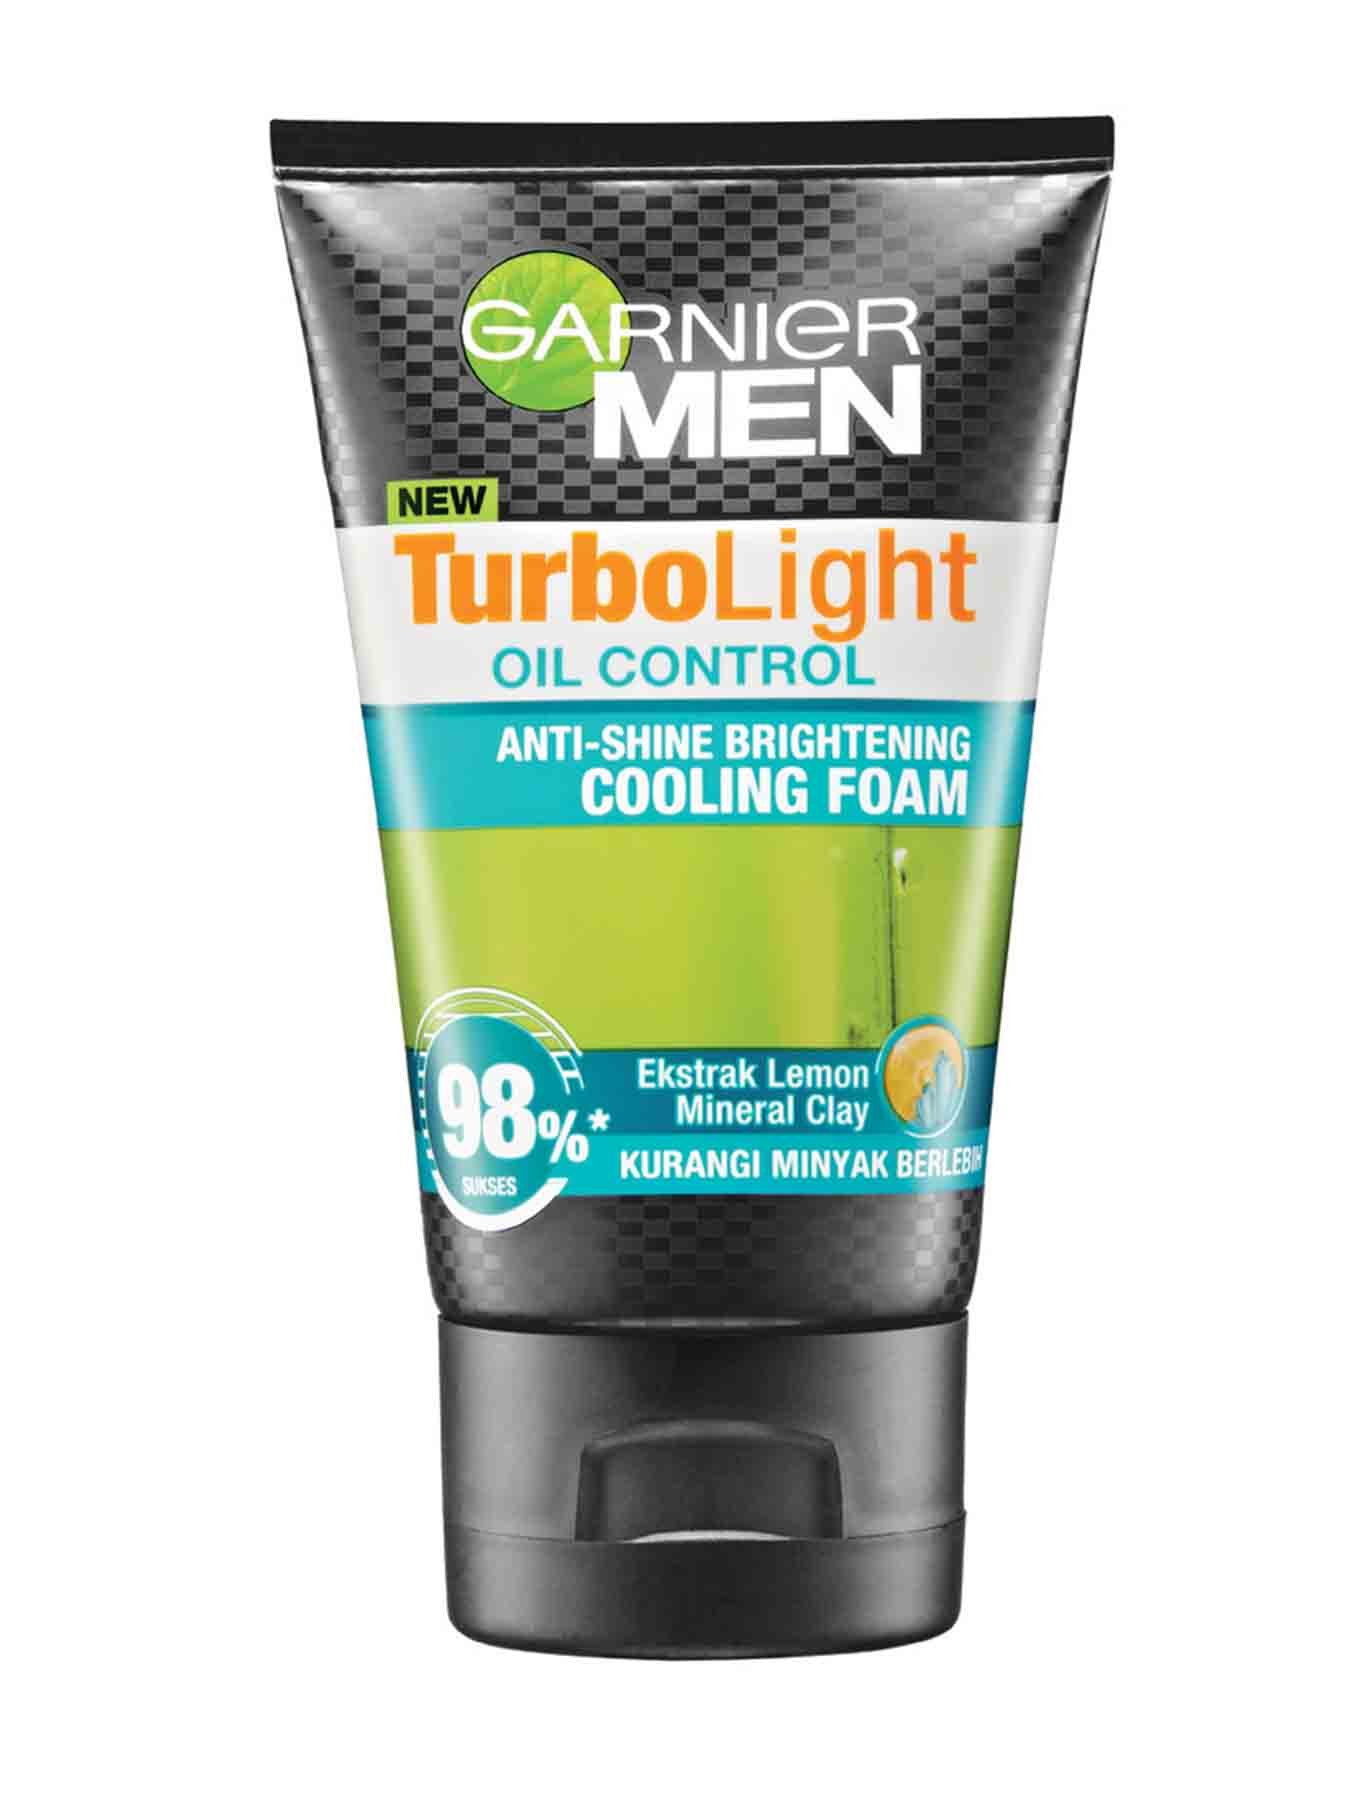 garnier men turbo light oil control anti shine brightening cooling foam